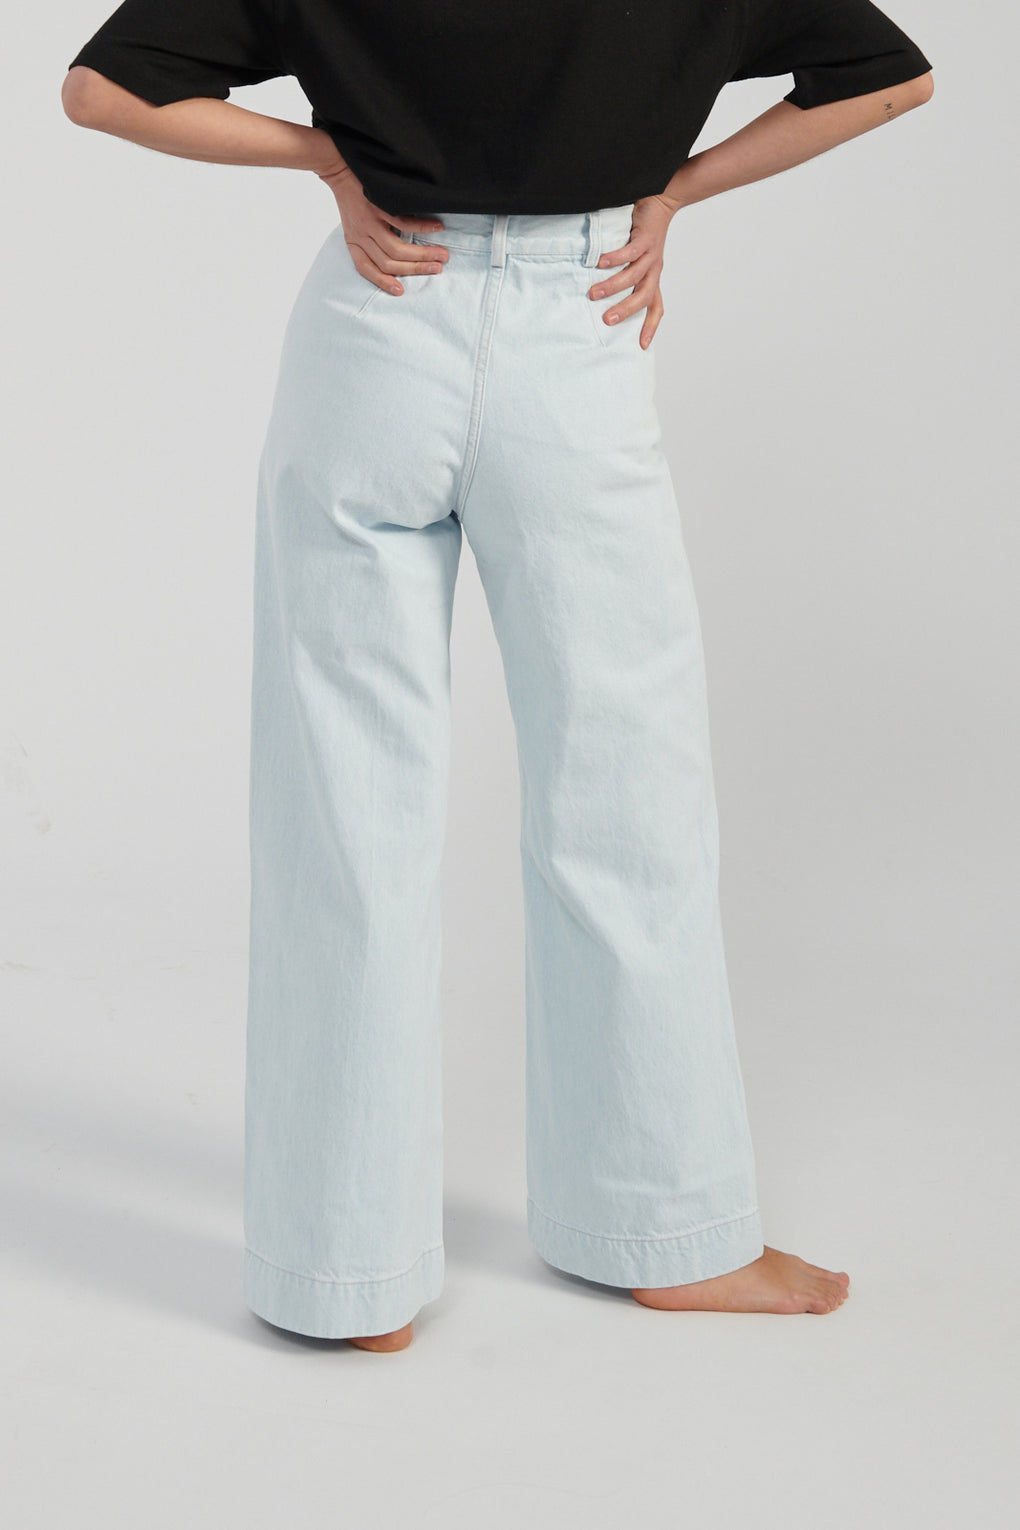 s United States Navy Denim Sailor Pants Trousers Blue Vietnam Era | eBay